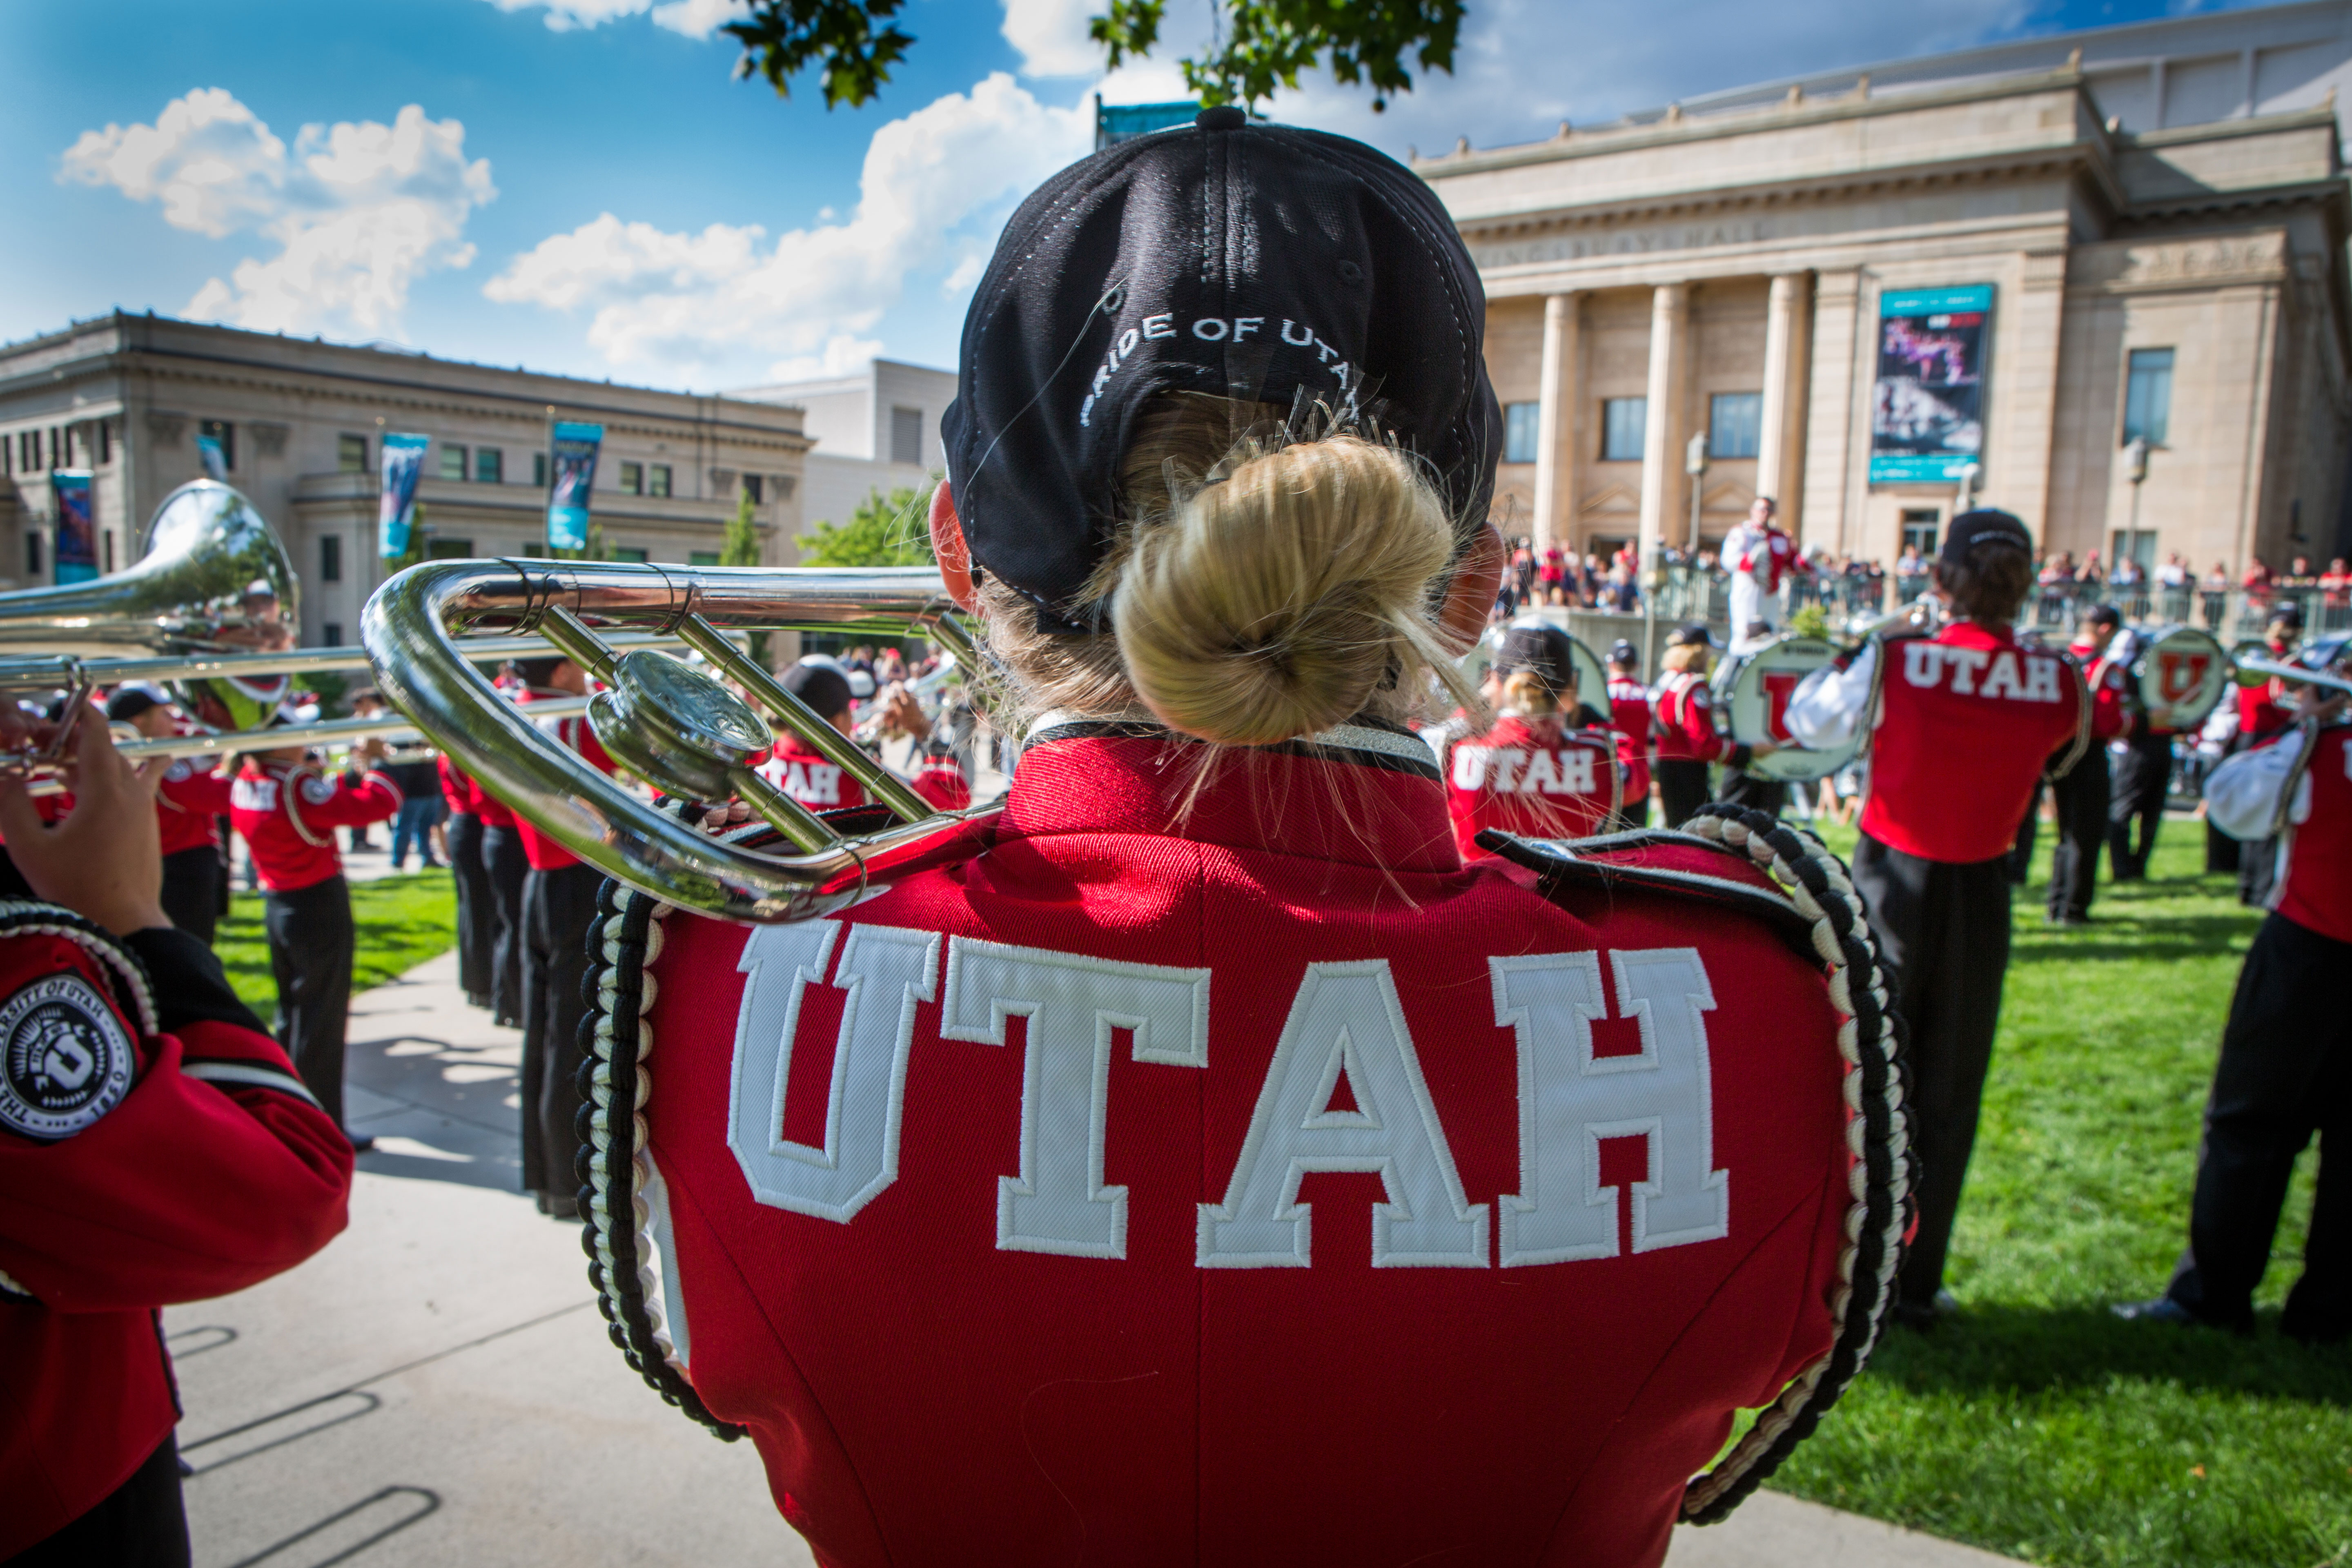 Student band of the University of Utah